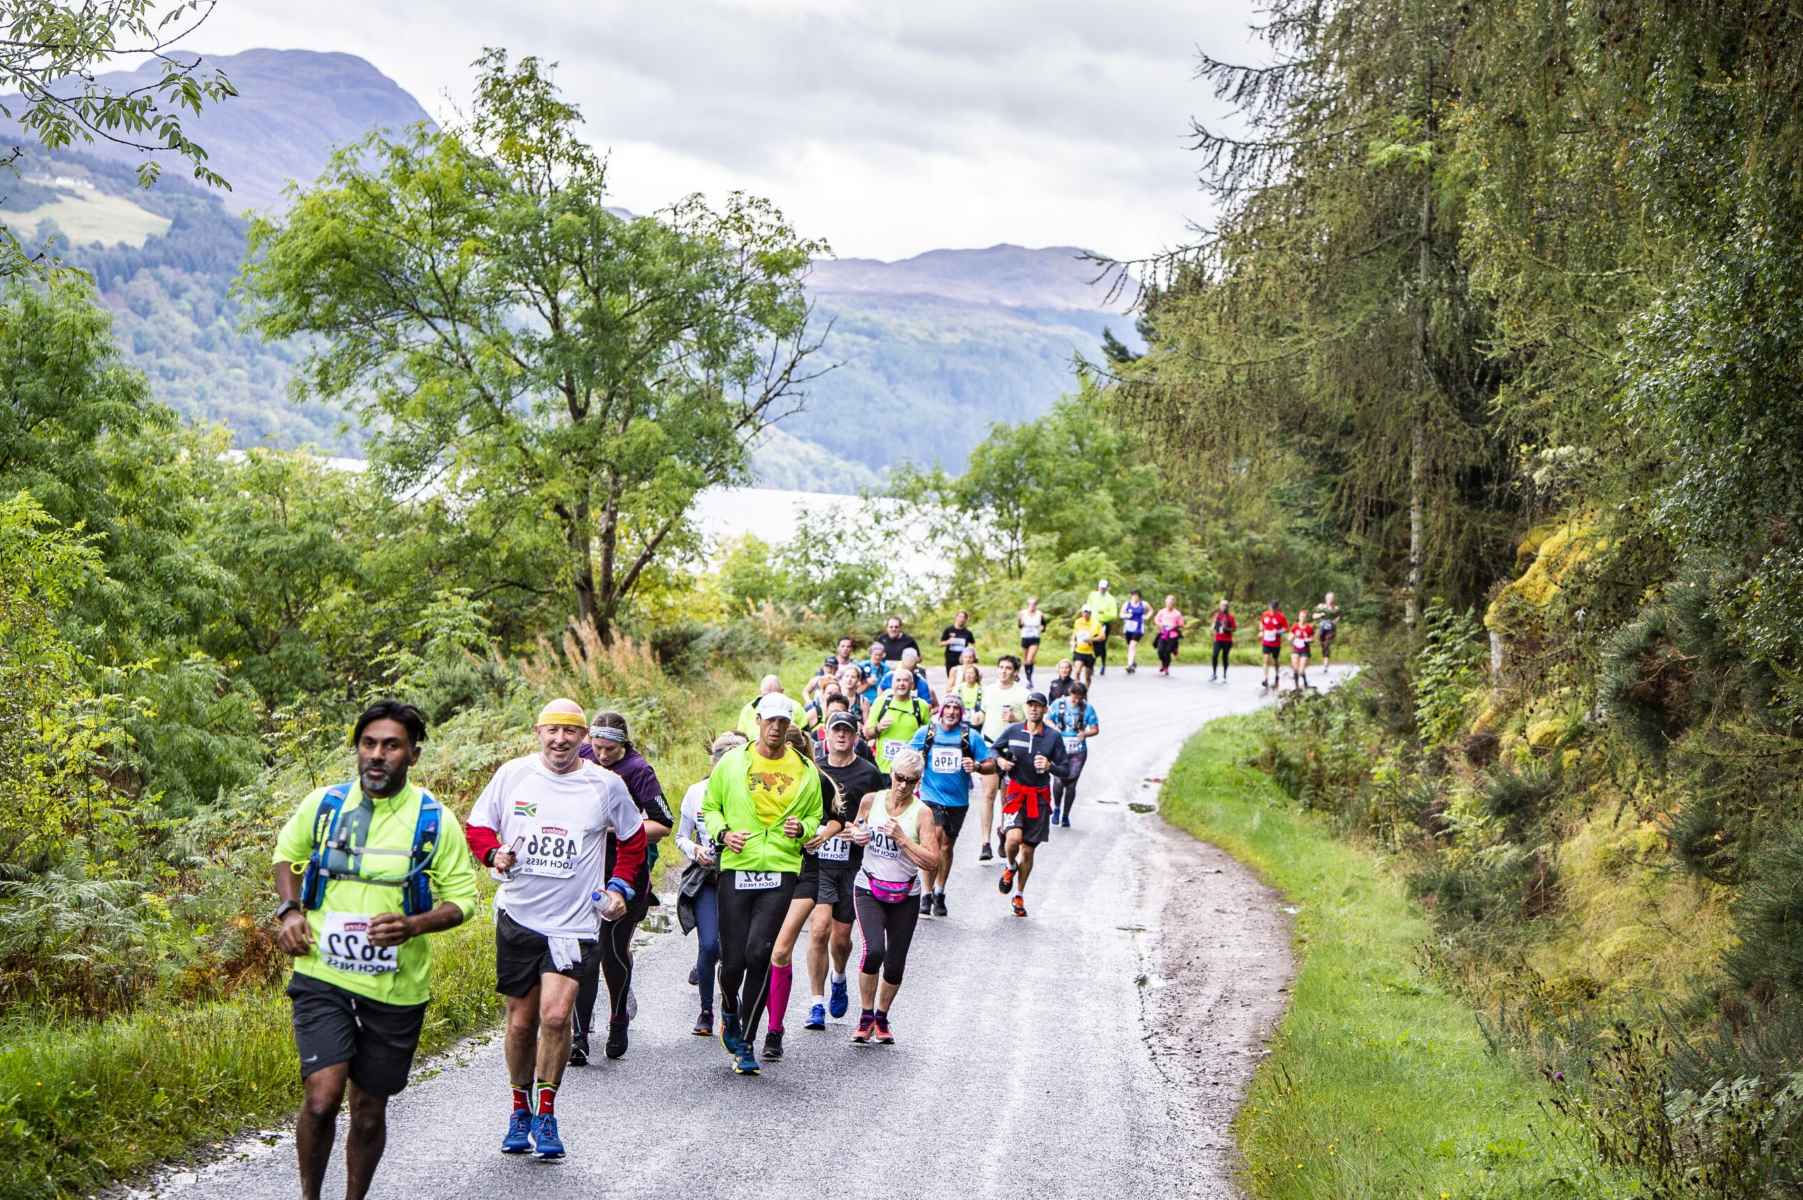 Baxters Loch Ness Marathon & Festival Of Running: A Promotion